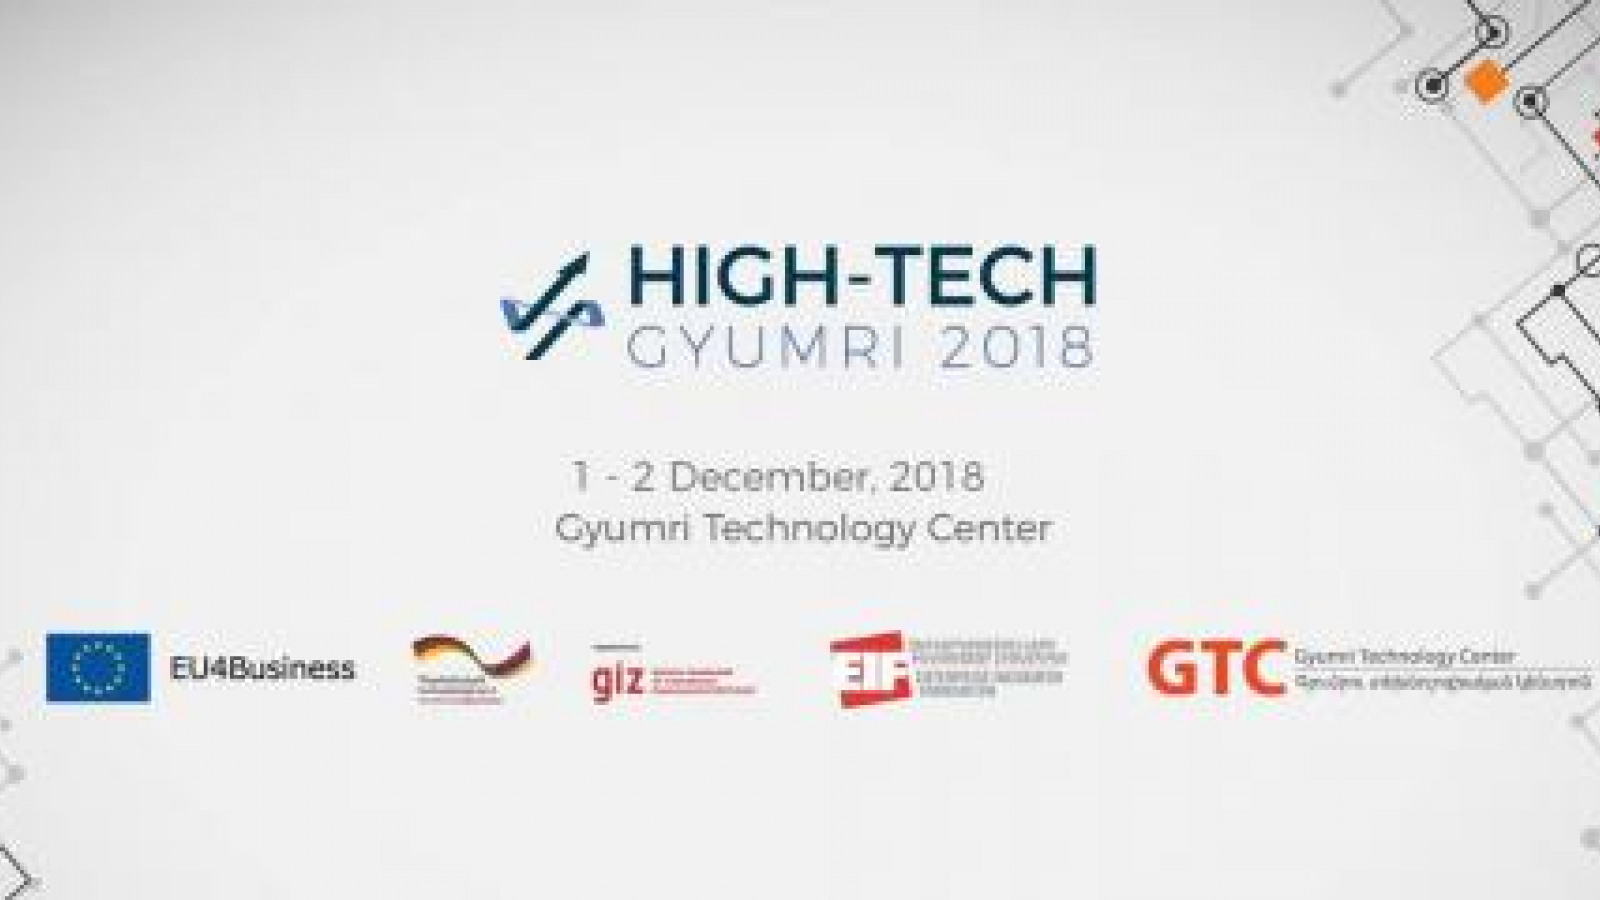 ‘Empowering Regions through High-Tech 2018’ – forum in Armenia